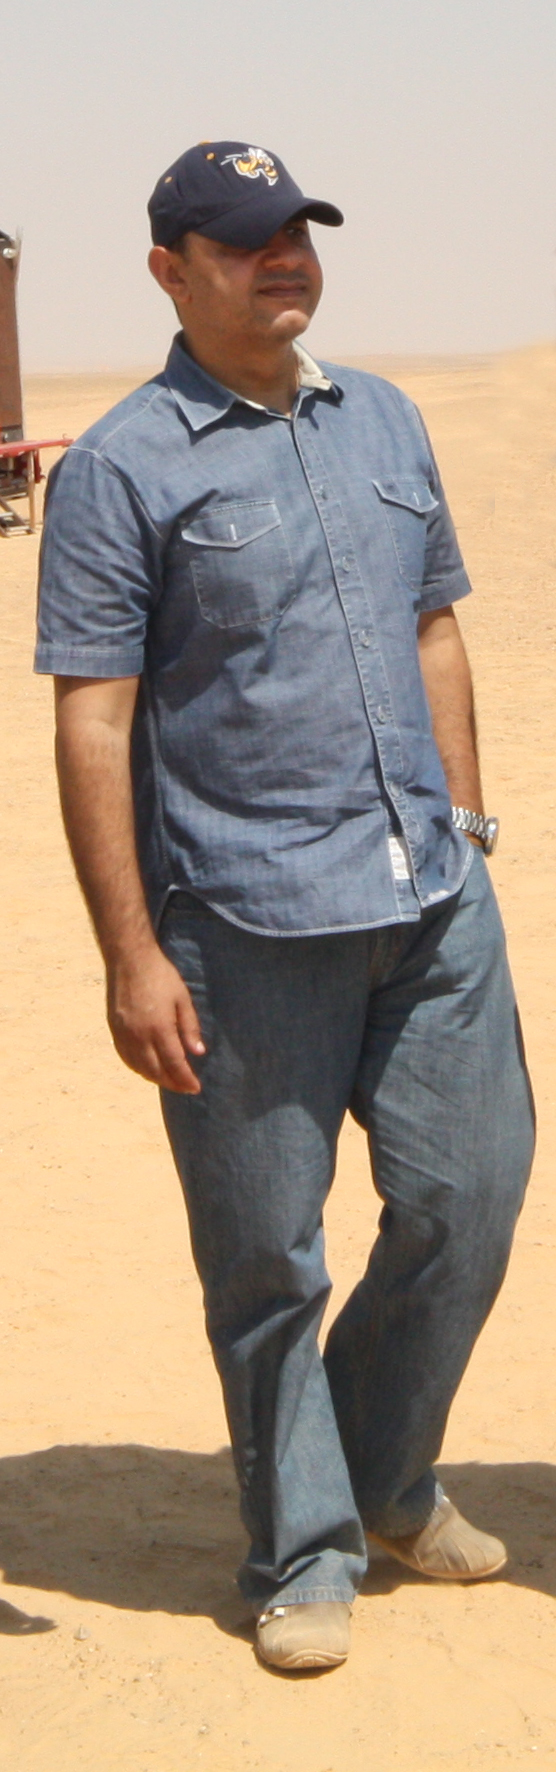 Hisham Soliman